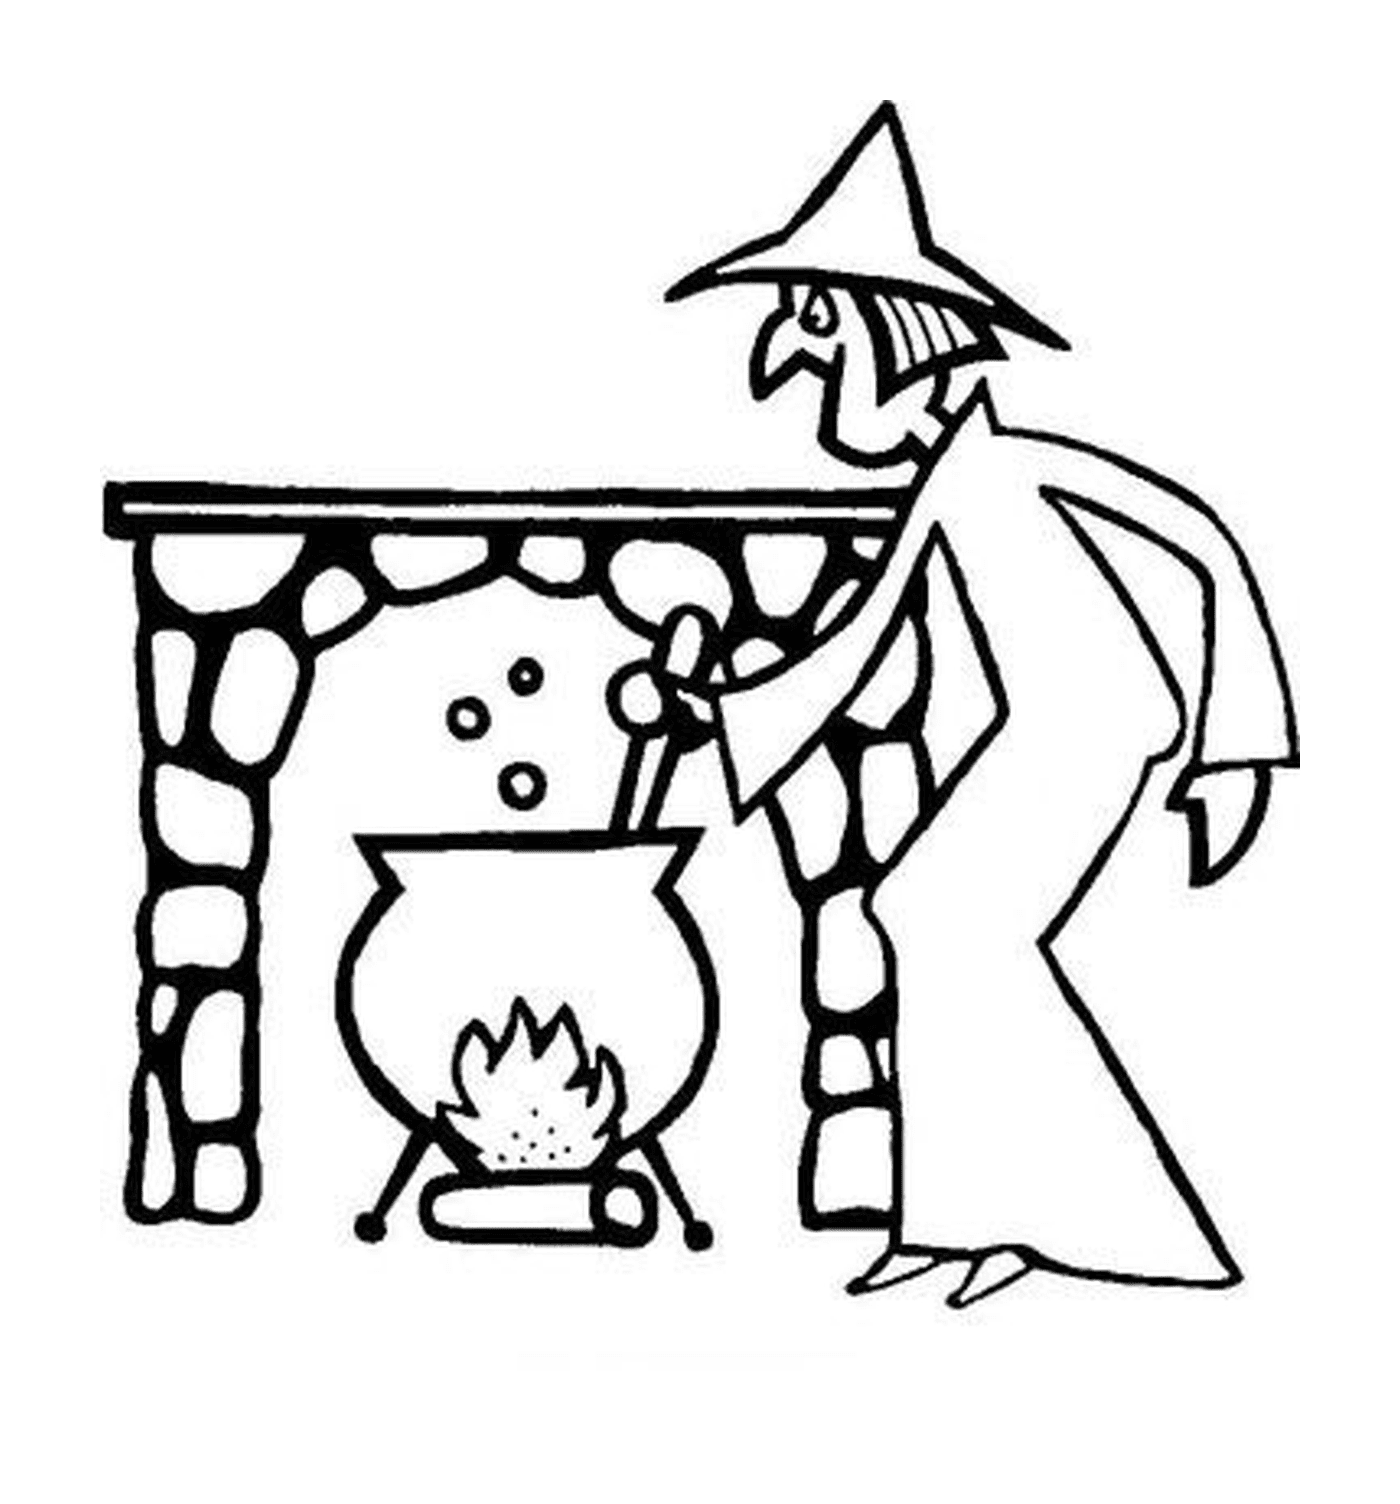  Witch stirring a cauldron 